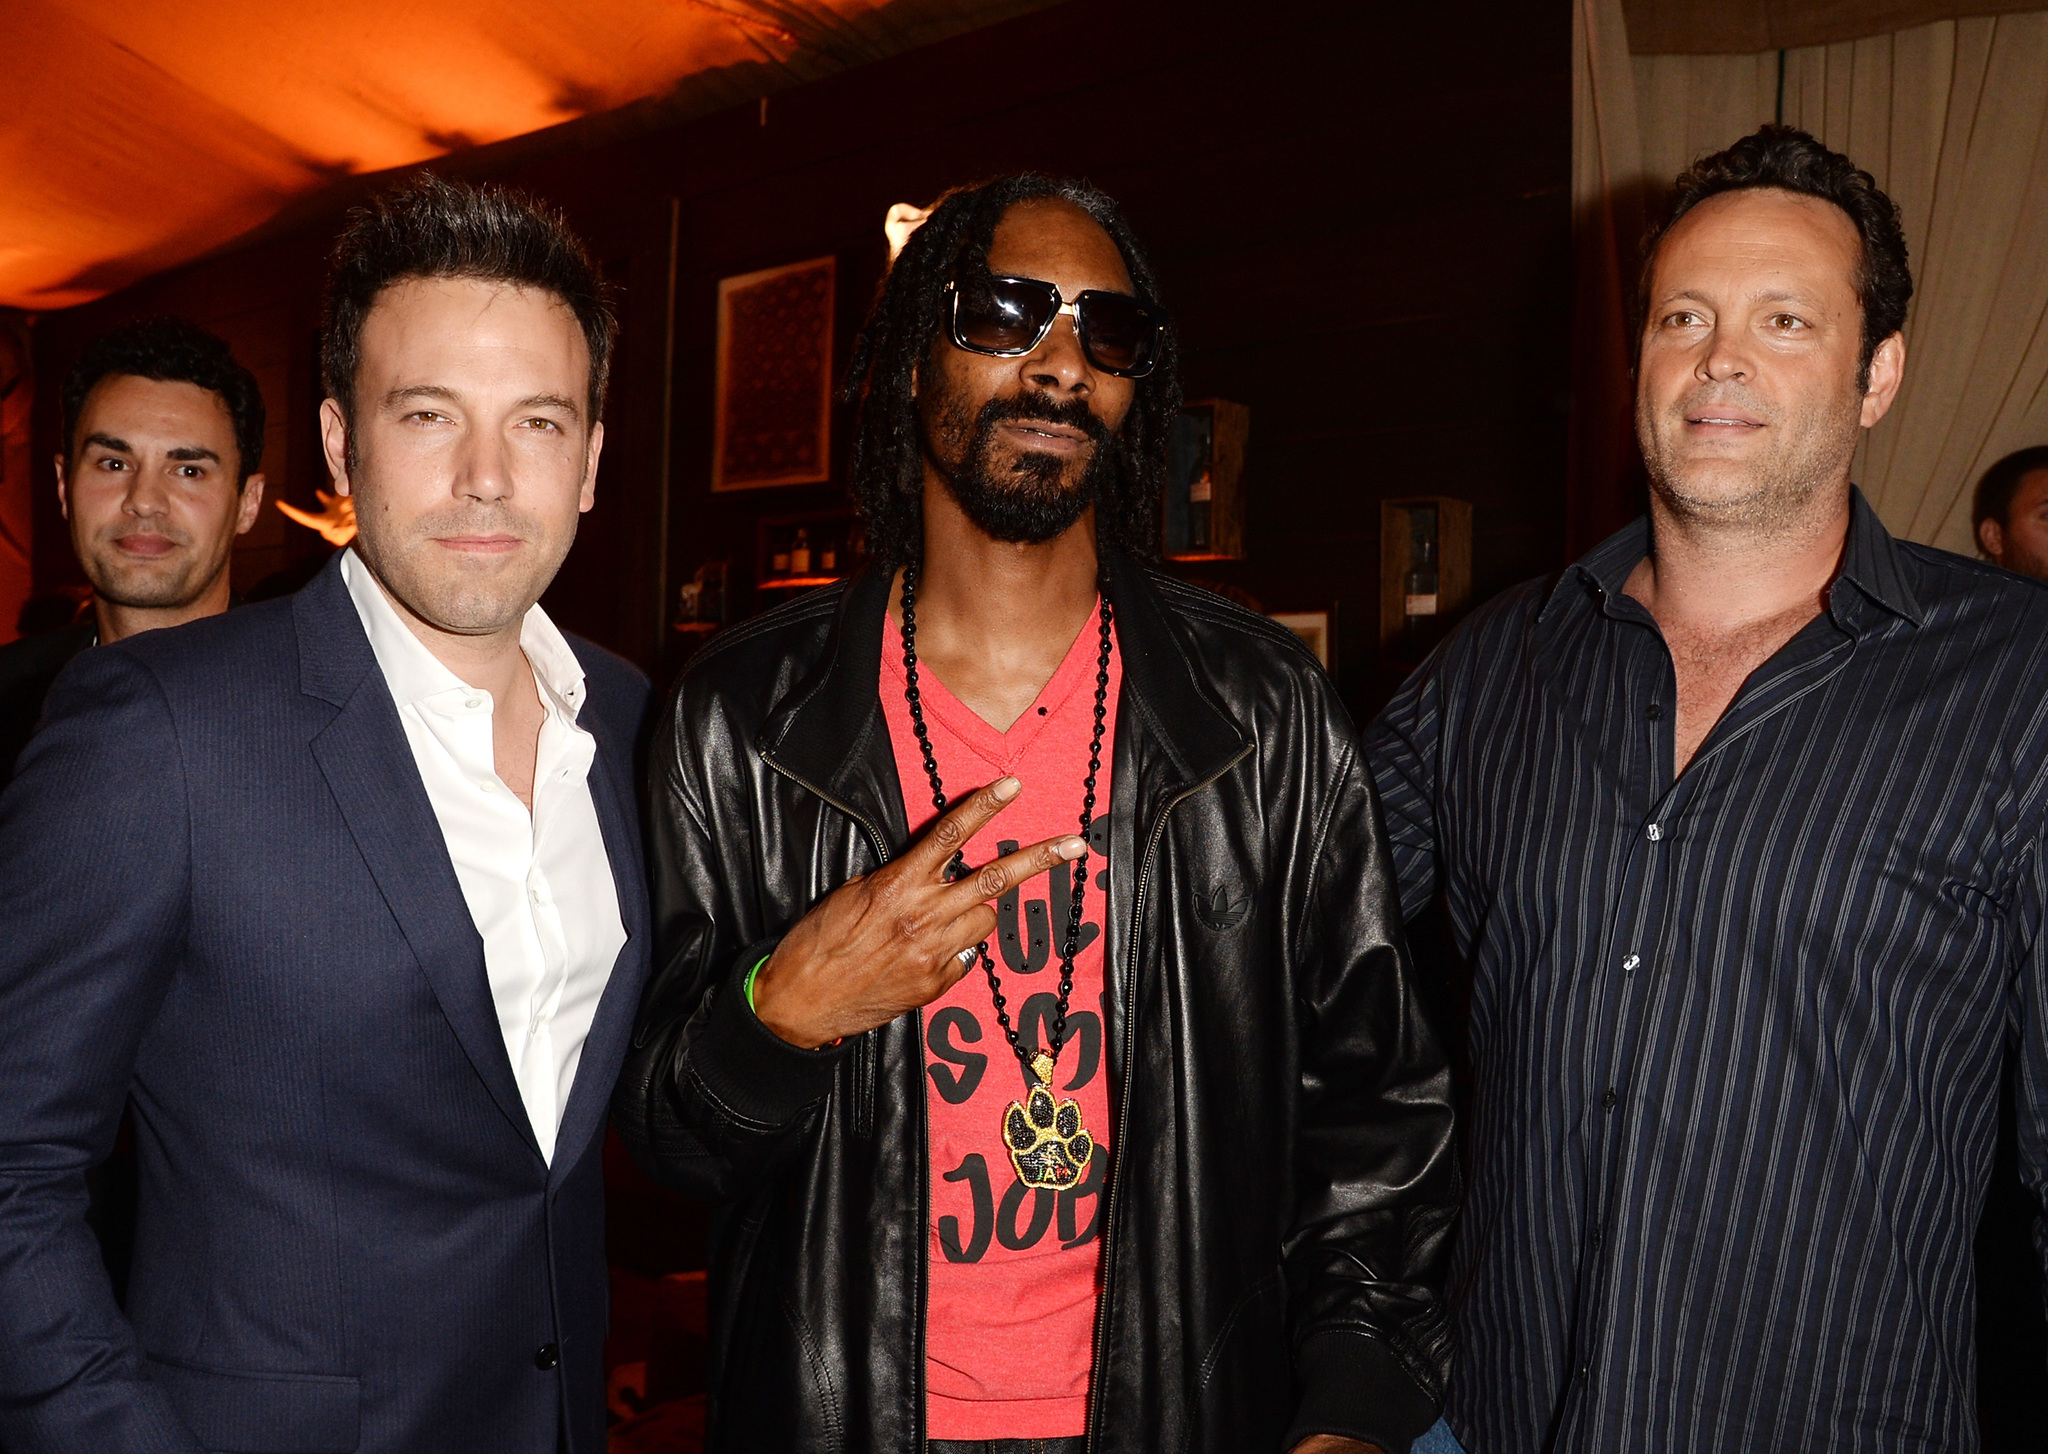 Ben Affleck, Vince Vaughn and Snoop Dogg